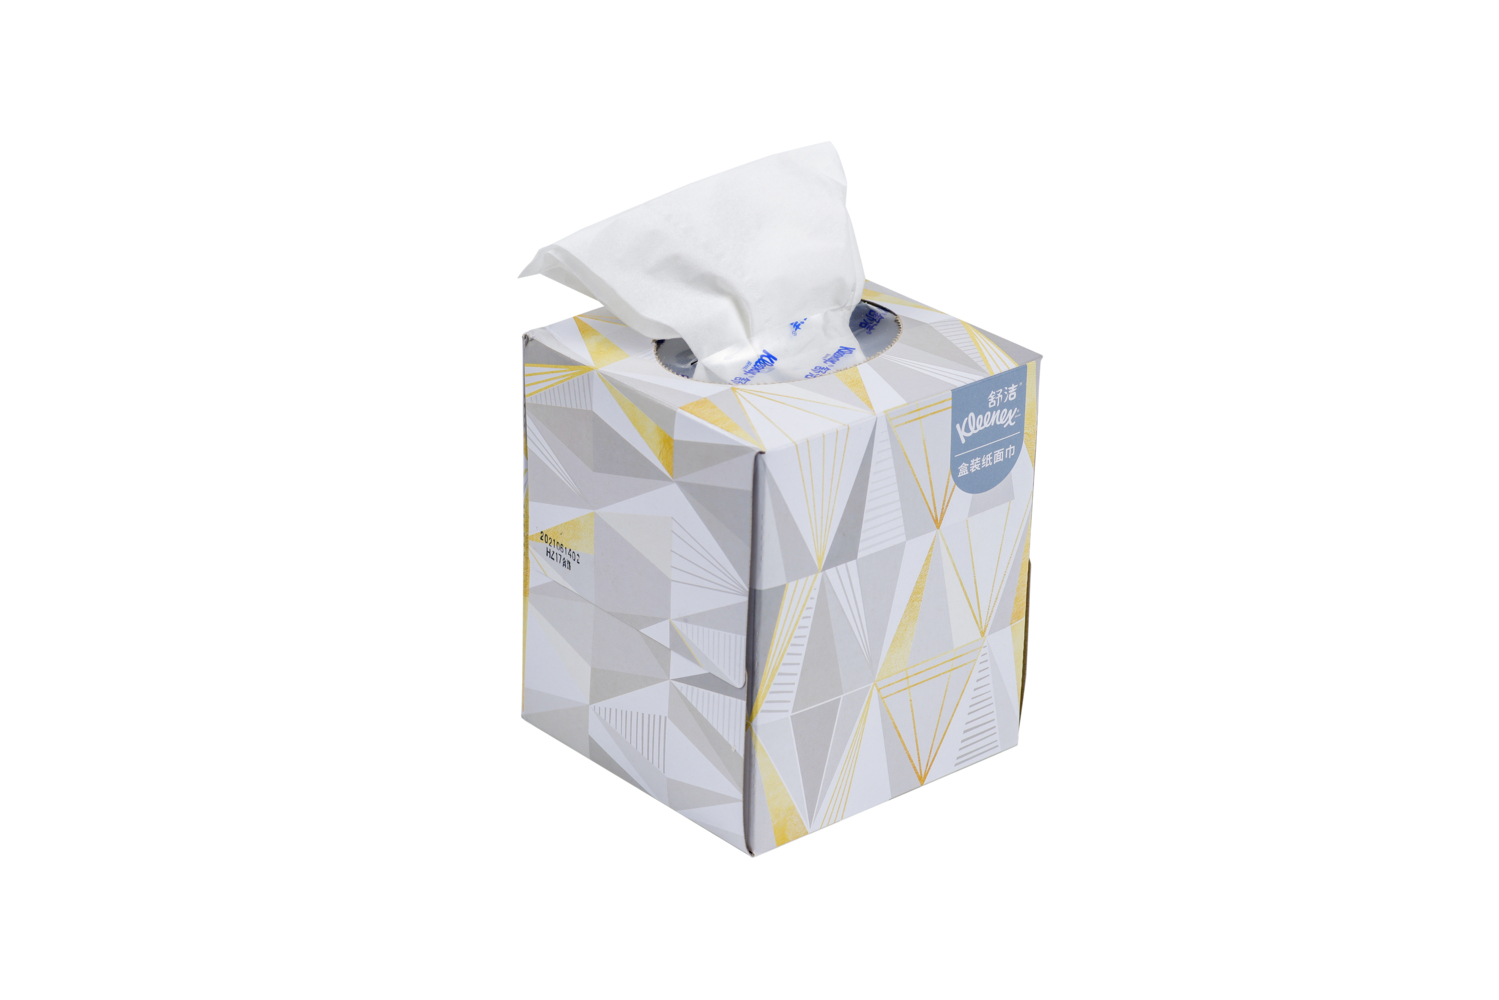 Kleenex®舒洁®立方盒装面纸(2层)，80张/盒，60盒/箱 - S059983392